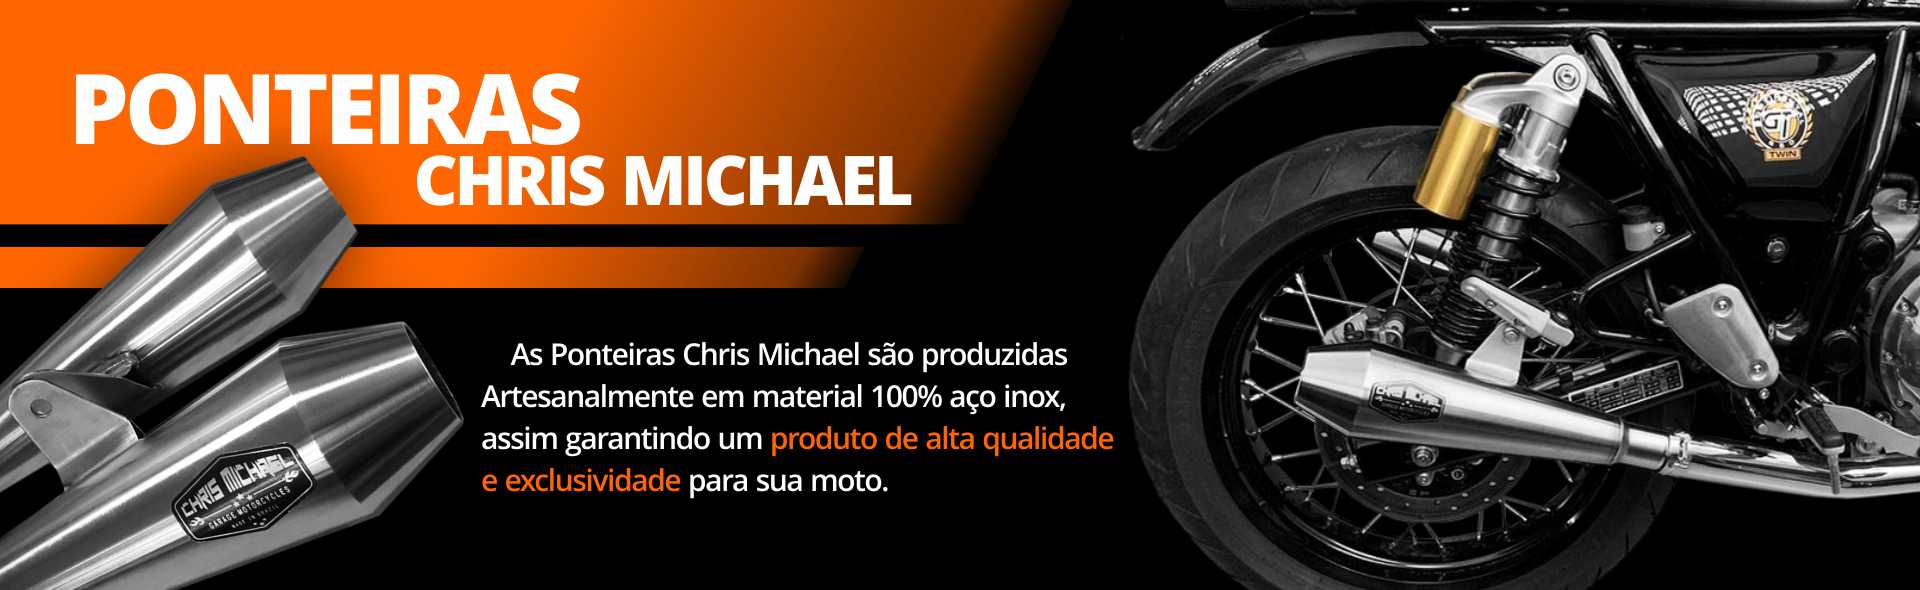 PRODUTO - CHRIS MICHAEL